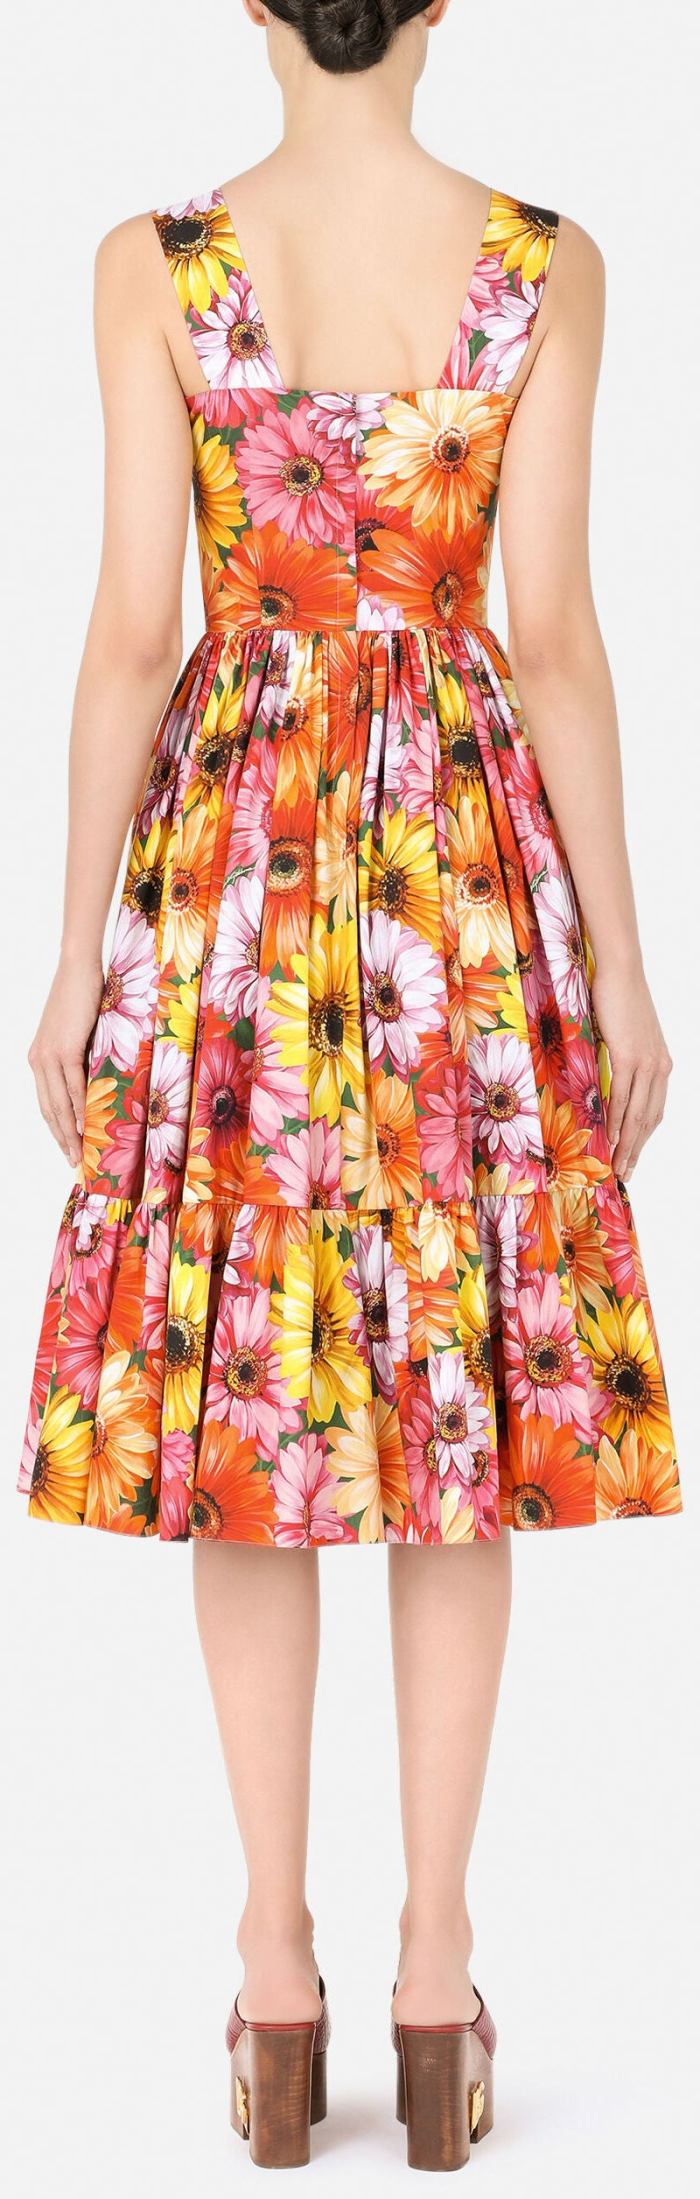 Gerbera-Daisy Print Midi Sun Dress Inspired Fashions Boutique